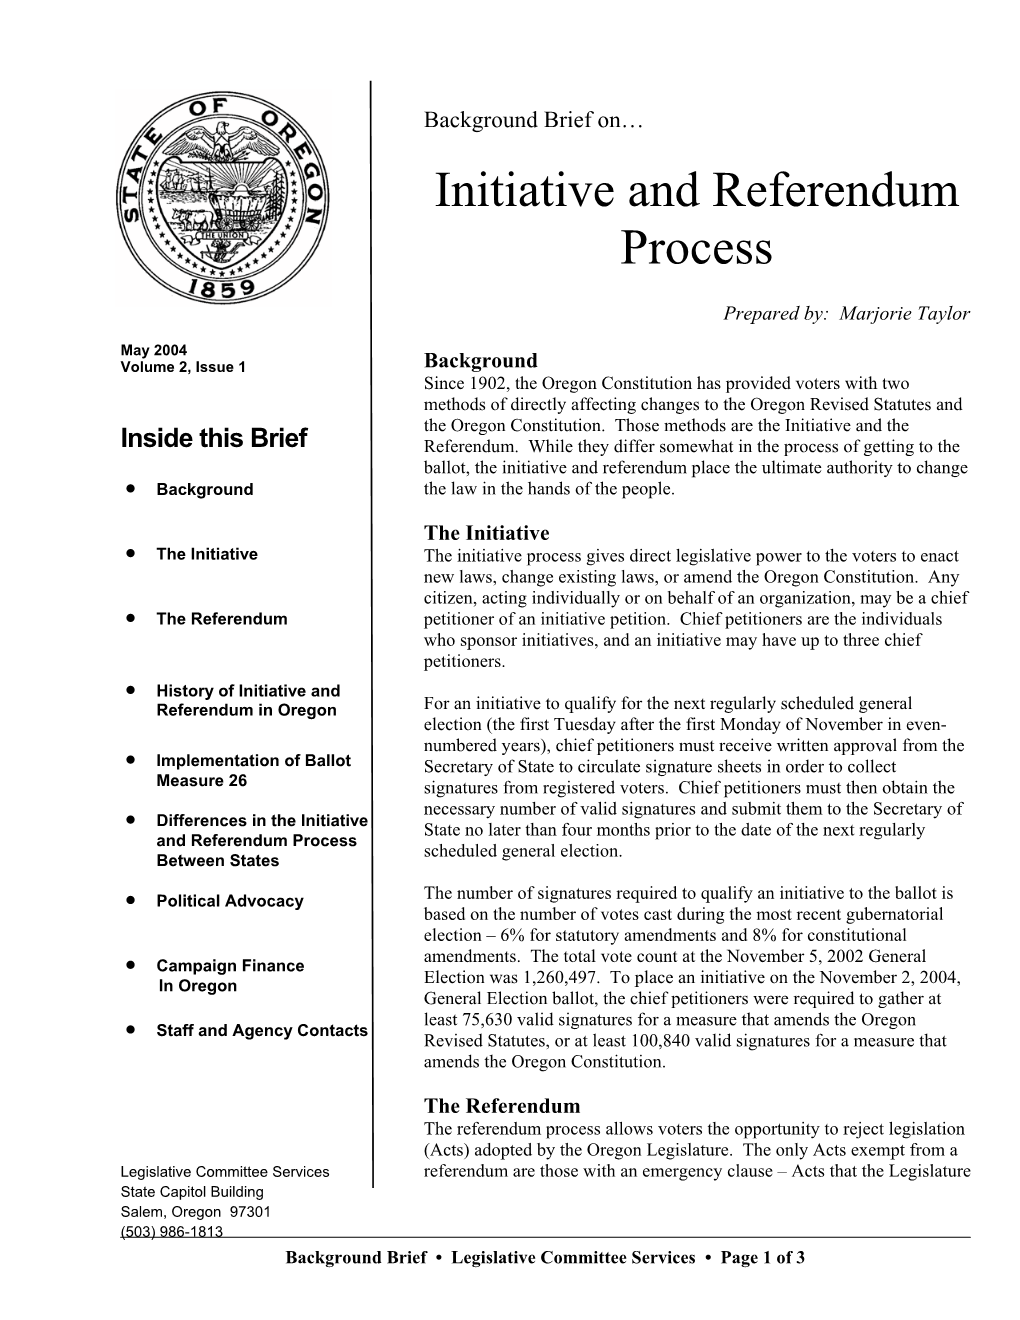 Initiative and Referendum Process